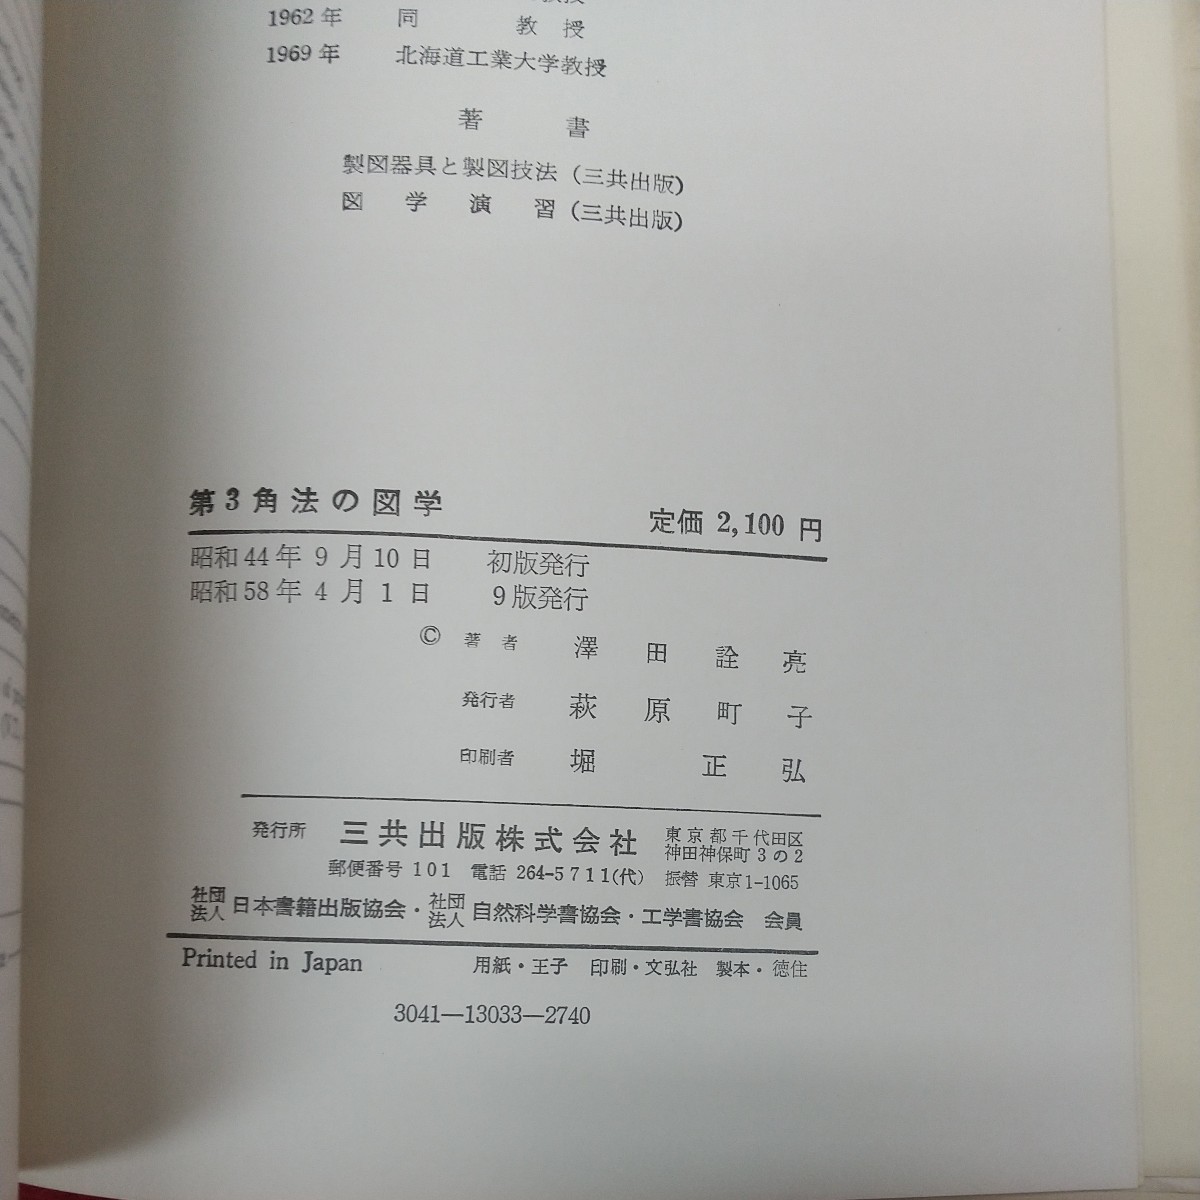 b-607 ※8 第3角法の図学 著者 澤田詮亮 昭和58年4月1日 9版発行 三共出版 数学 図学 幾何学 点 直線 平面 回転 曲線 立体 ねじれ面_画像5